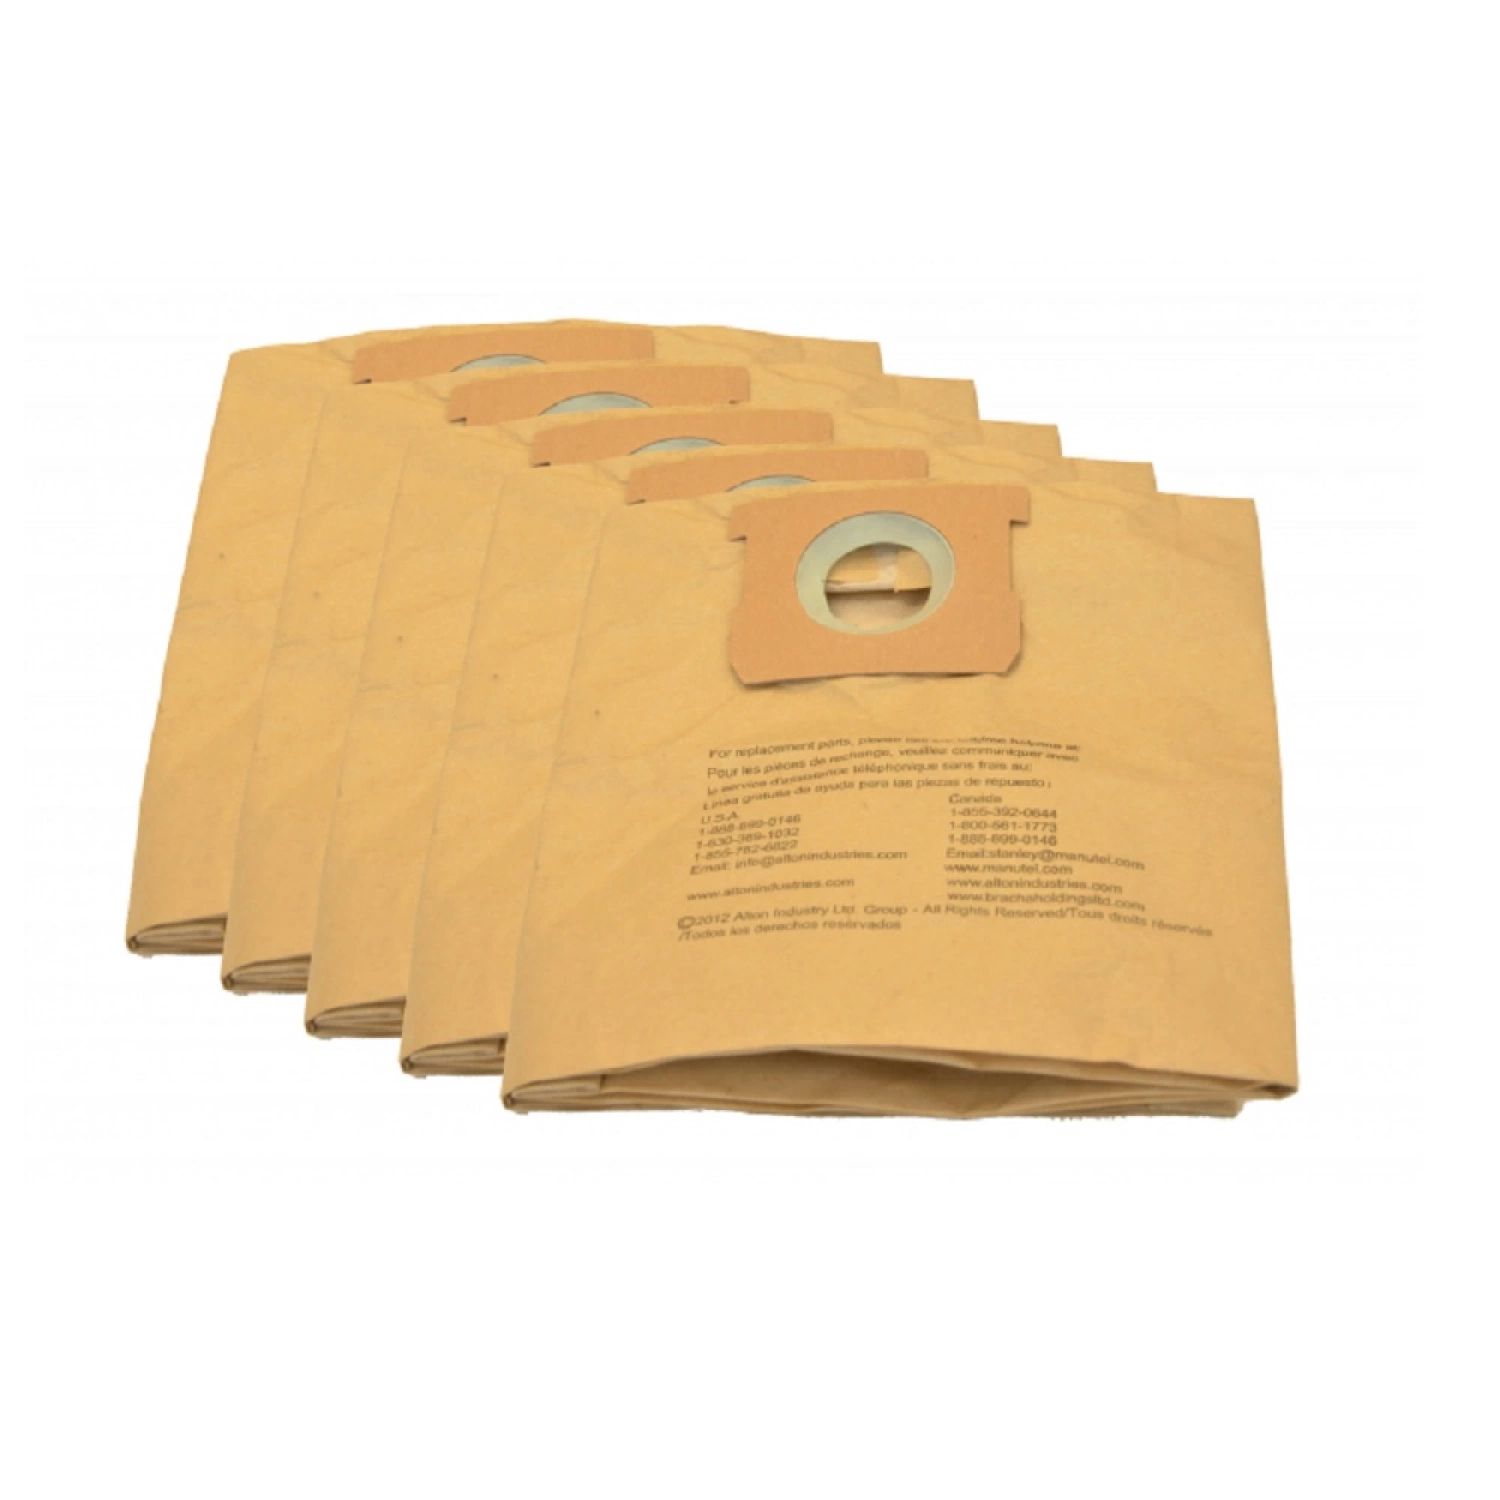 Perfectmate VAC23-026 Dust-Safe stofzakken voor VAC23 stofzuiger (5st)